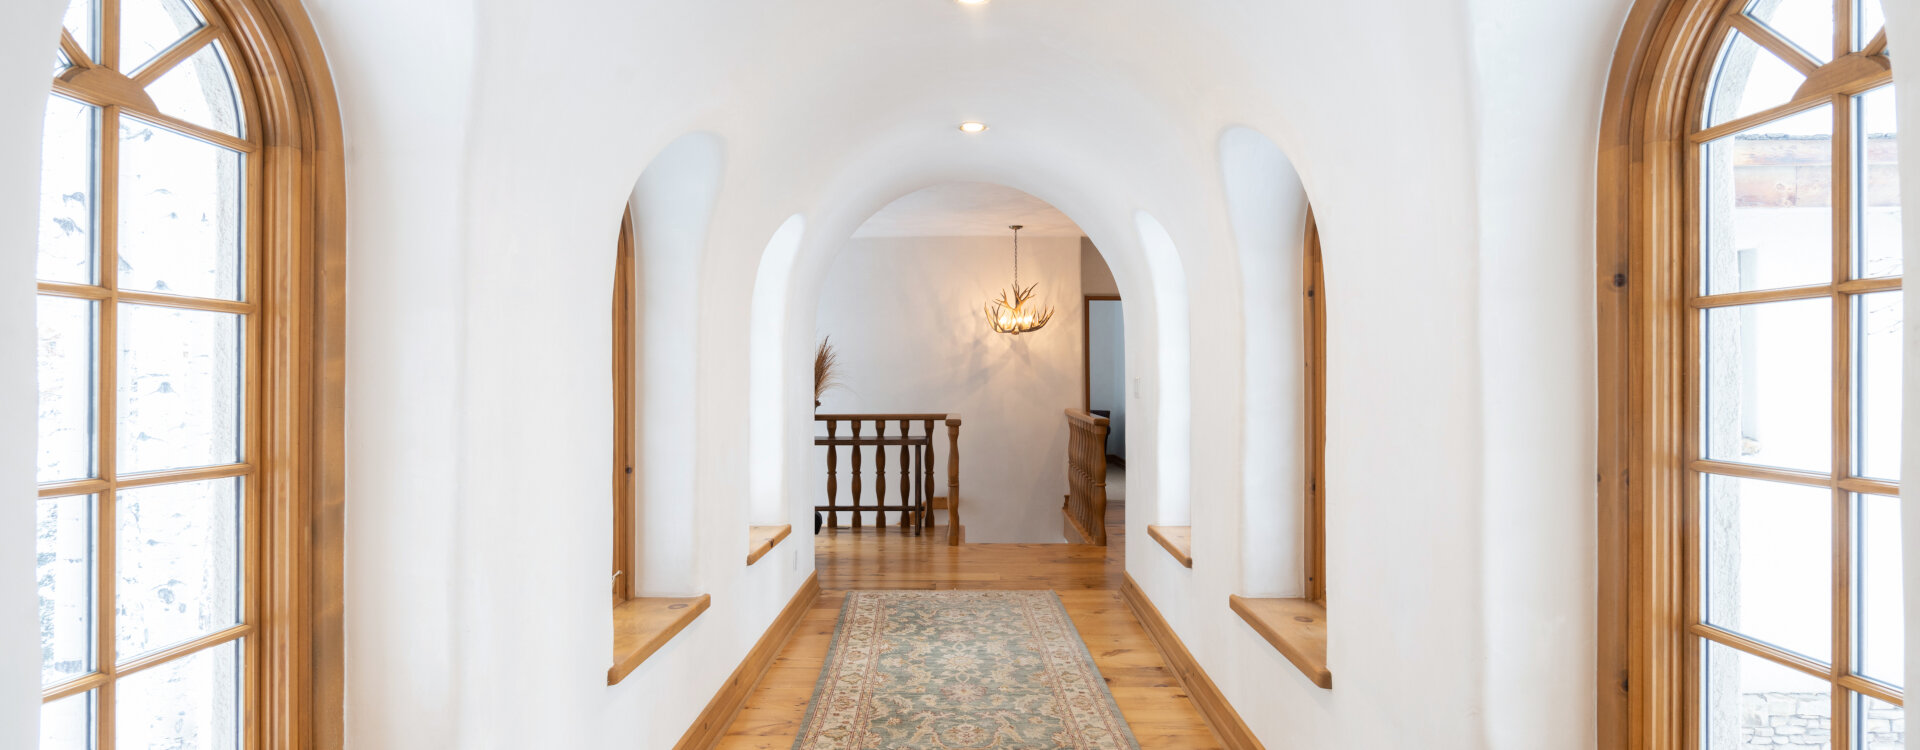 1.15-telluride-founders-retreat-hallway